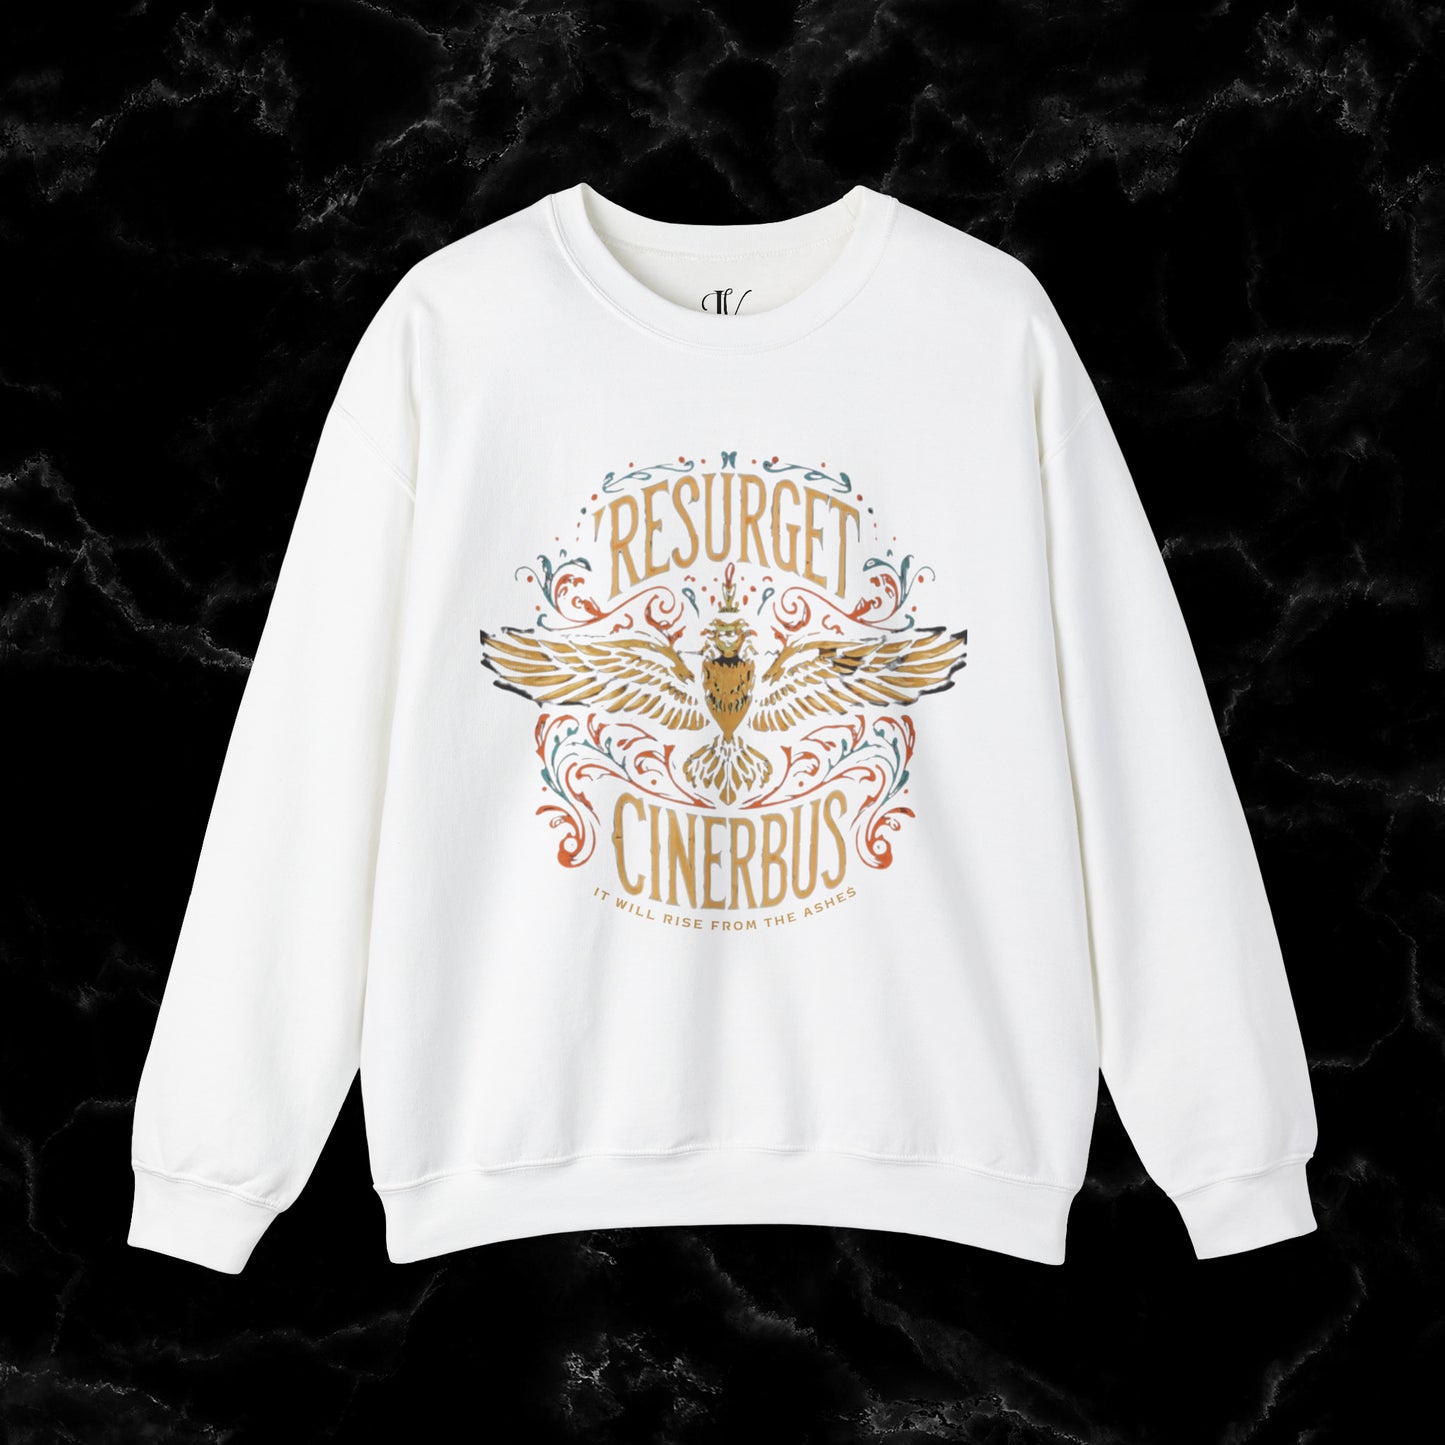 Resurget Cineribus Unisex Crewneck Sweatshirt - Latin Inspirational Gifts for Sports Football Fans Sweatshirt S White 